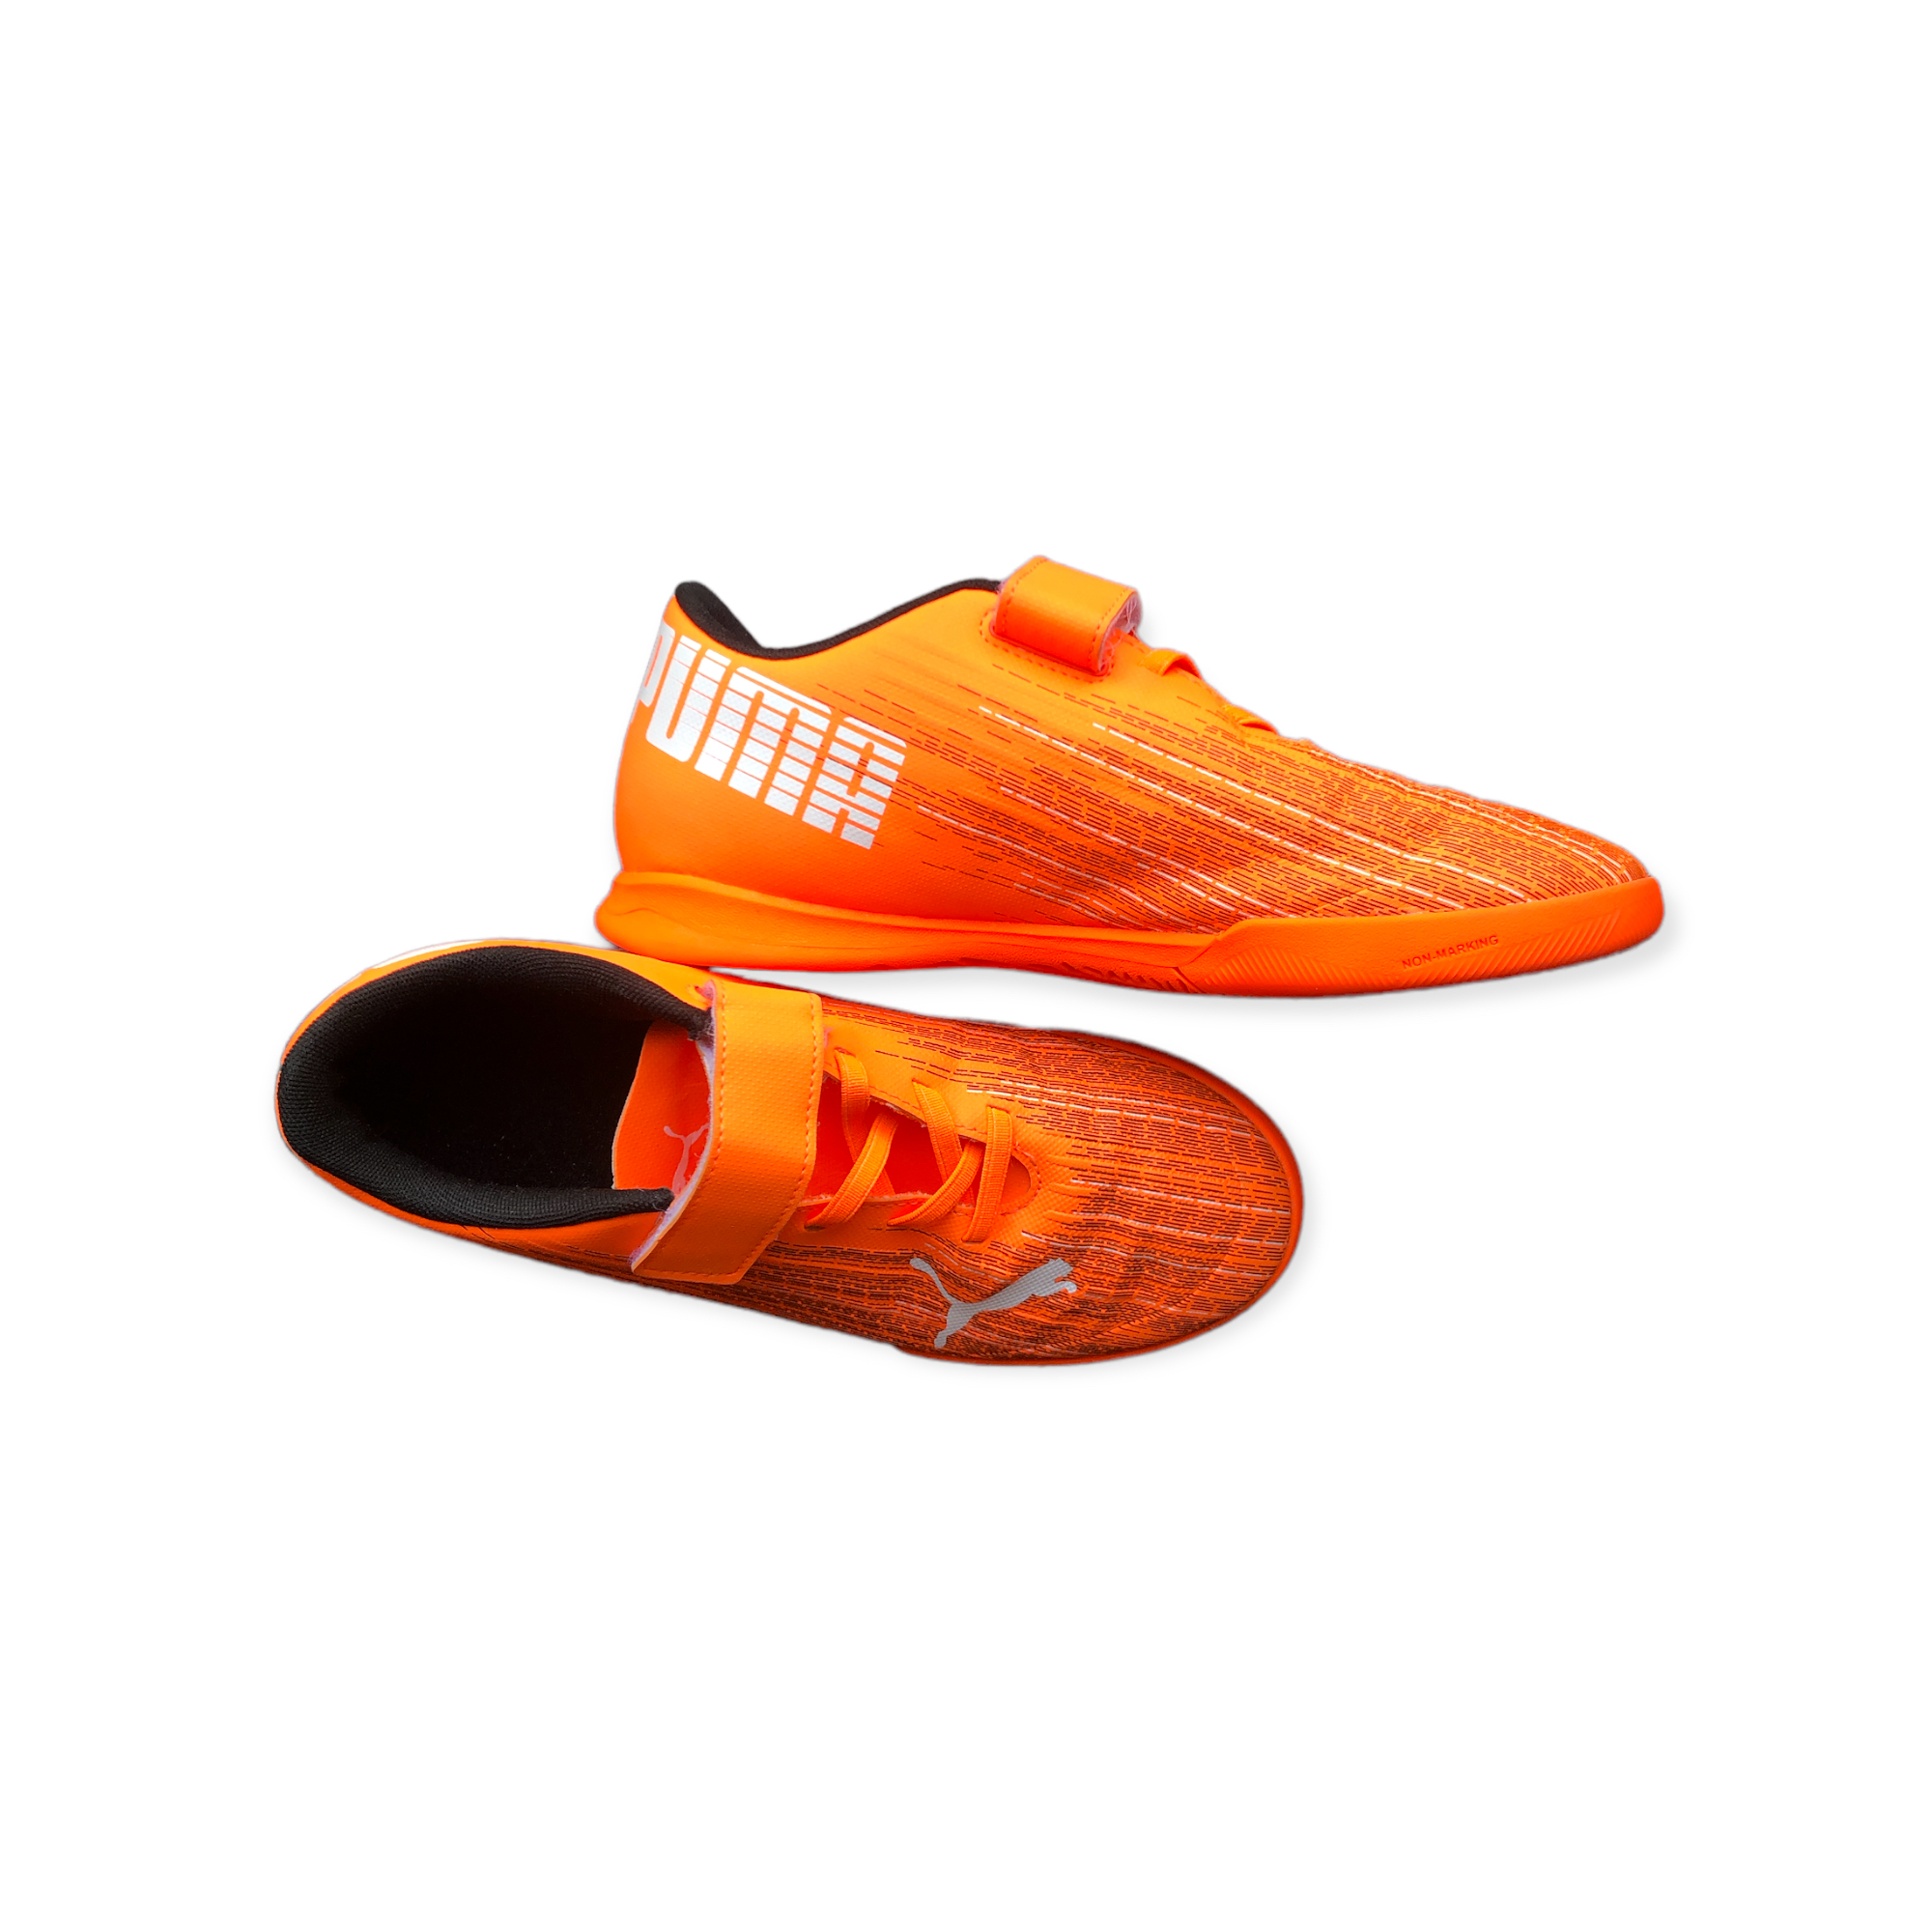 Preloved Puma oranje schoenen ♥ maat 38 (zaalvoetbal)